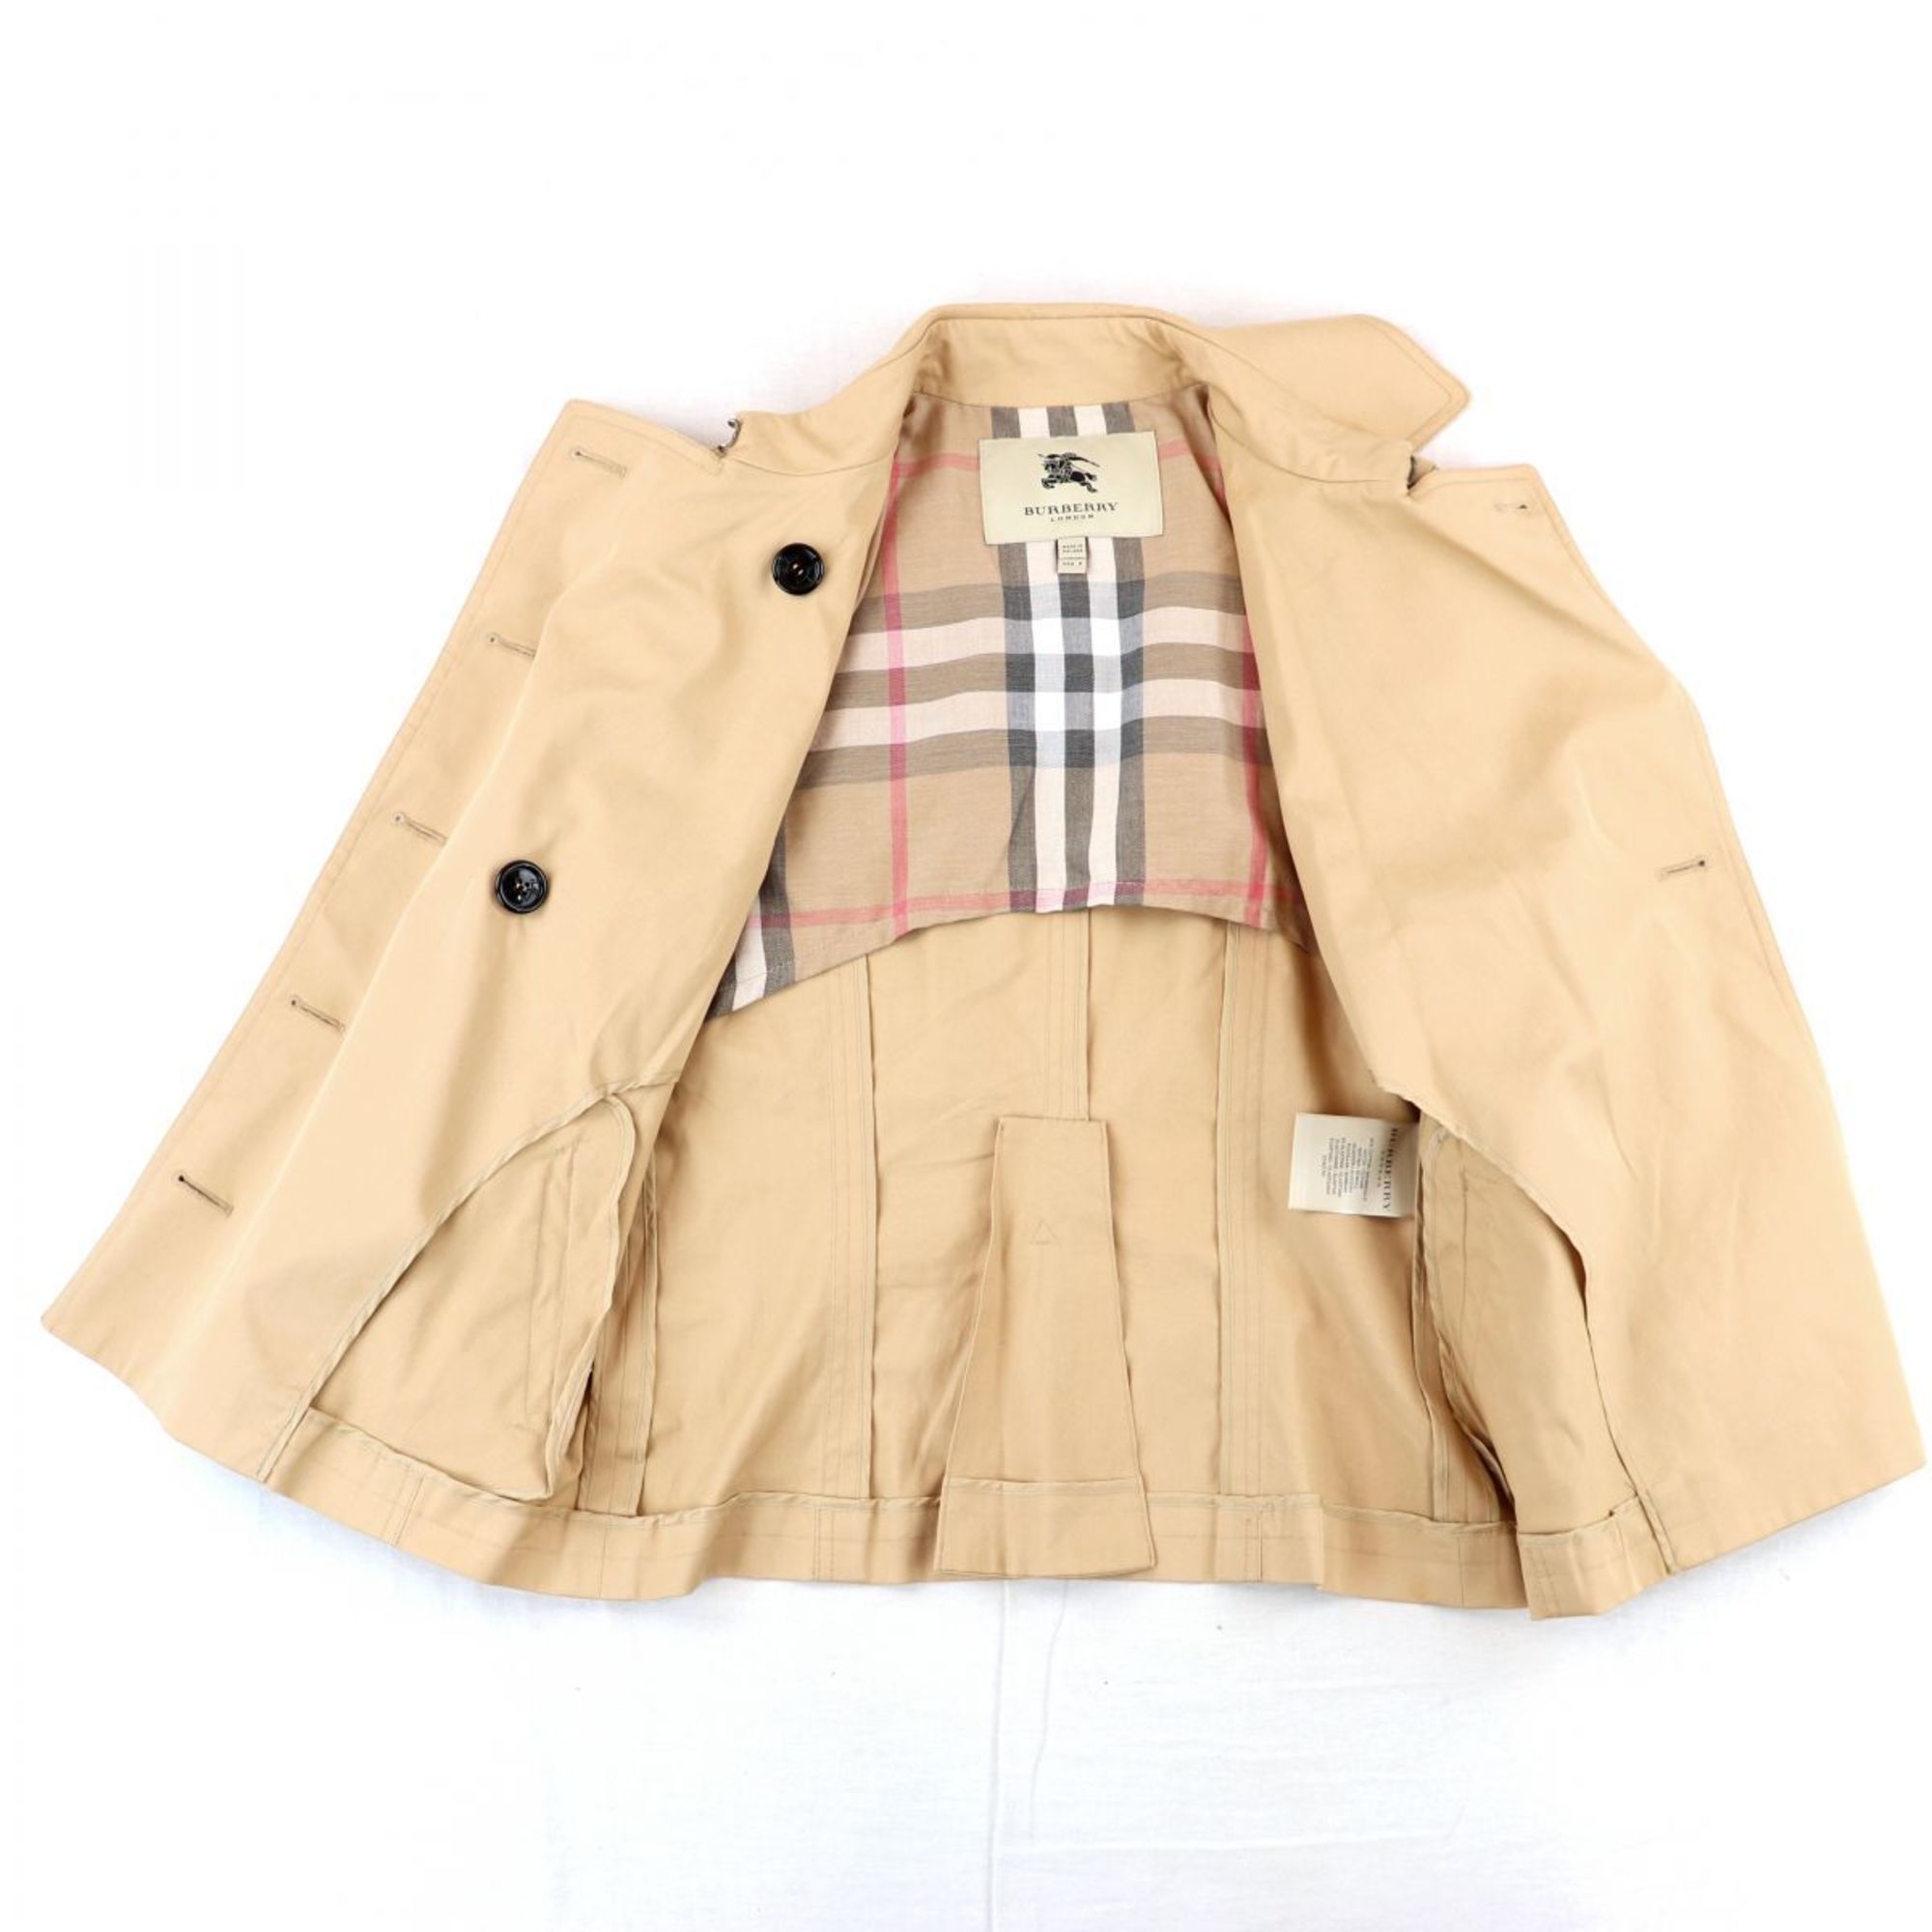 Burberry BURBERRY LONDON Setup Short Trench Coat Jacket Tight Skirt Ladies 38 Beige